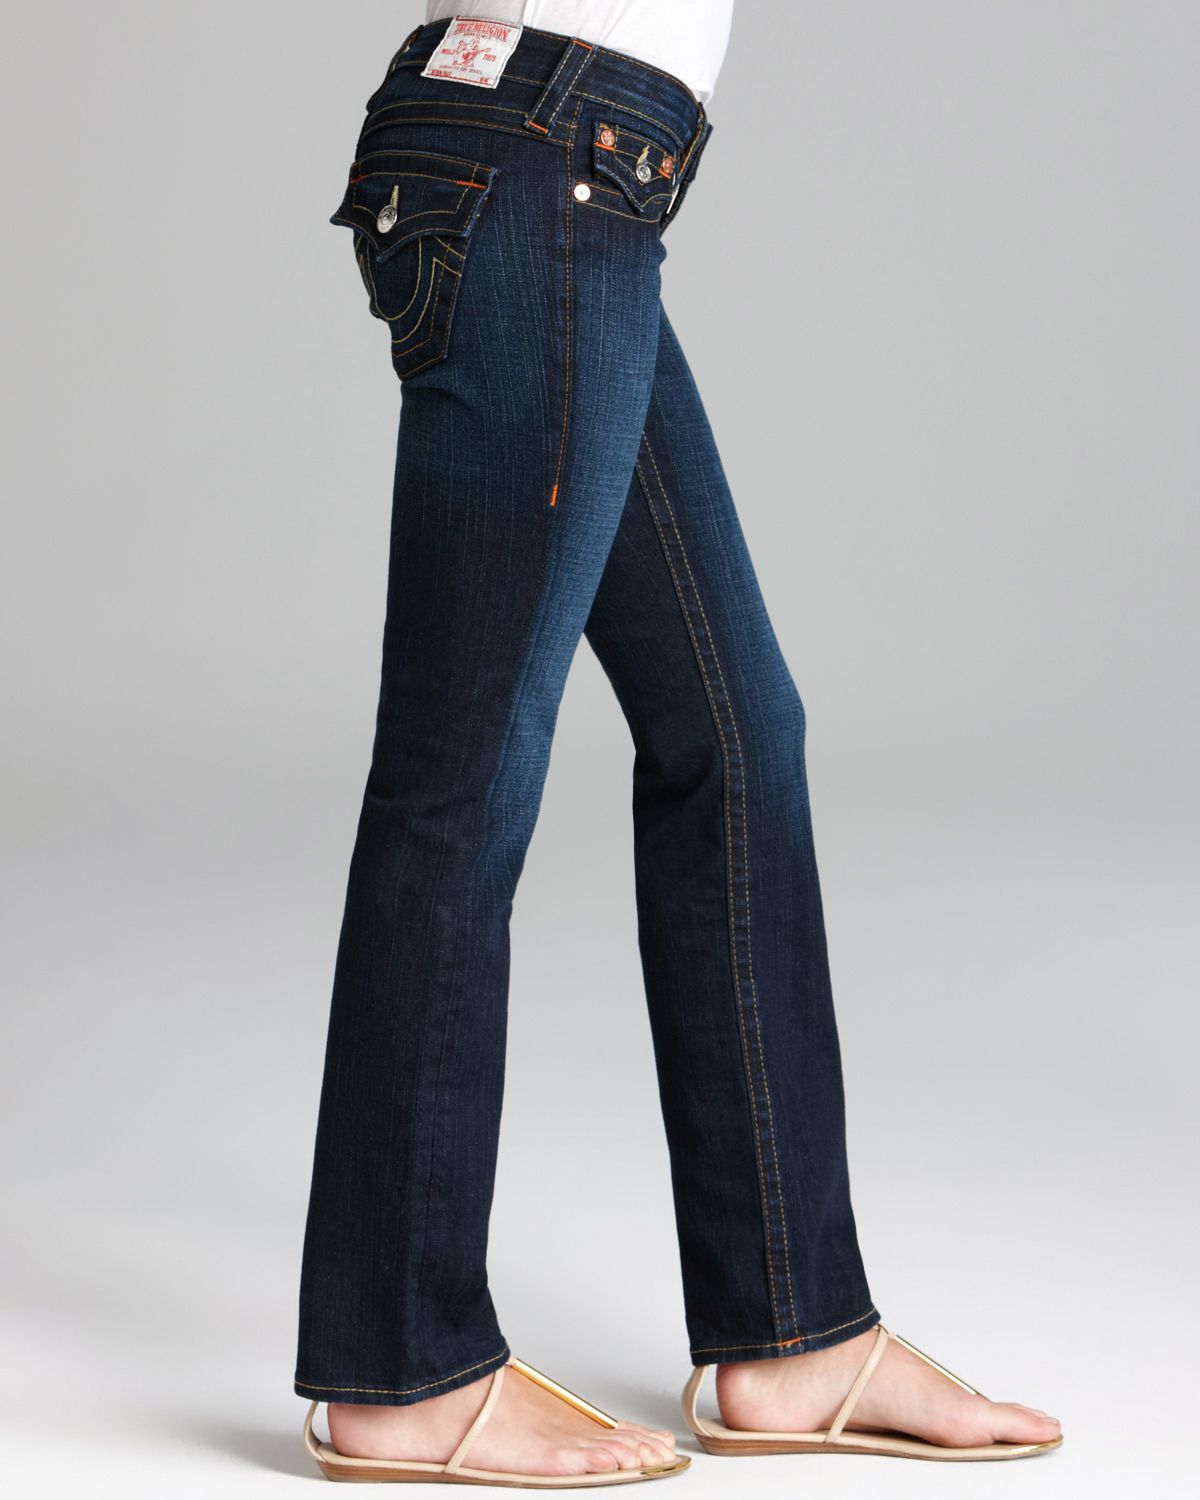 true religion billy jeans womens